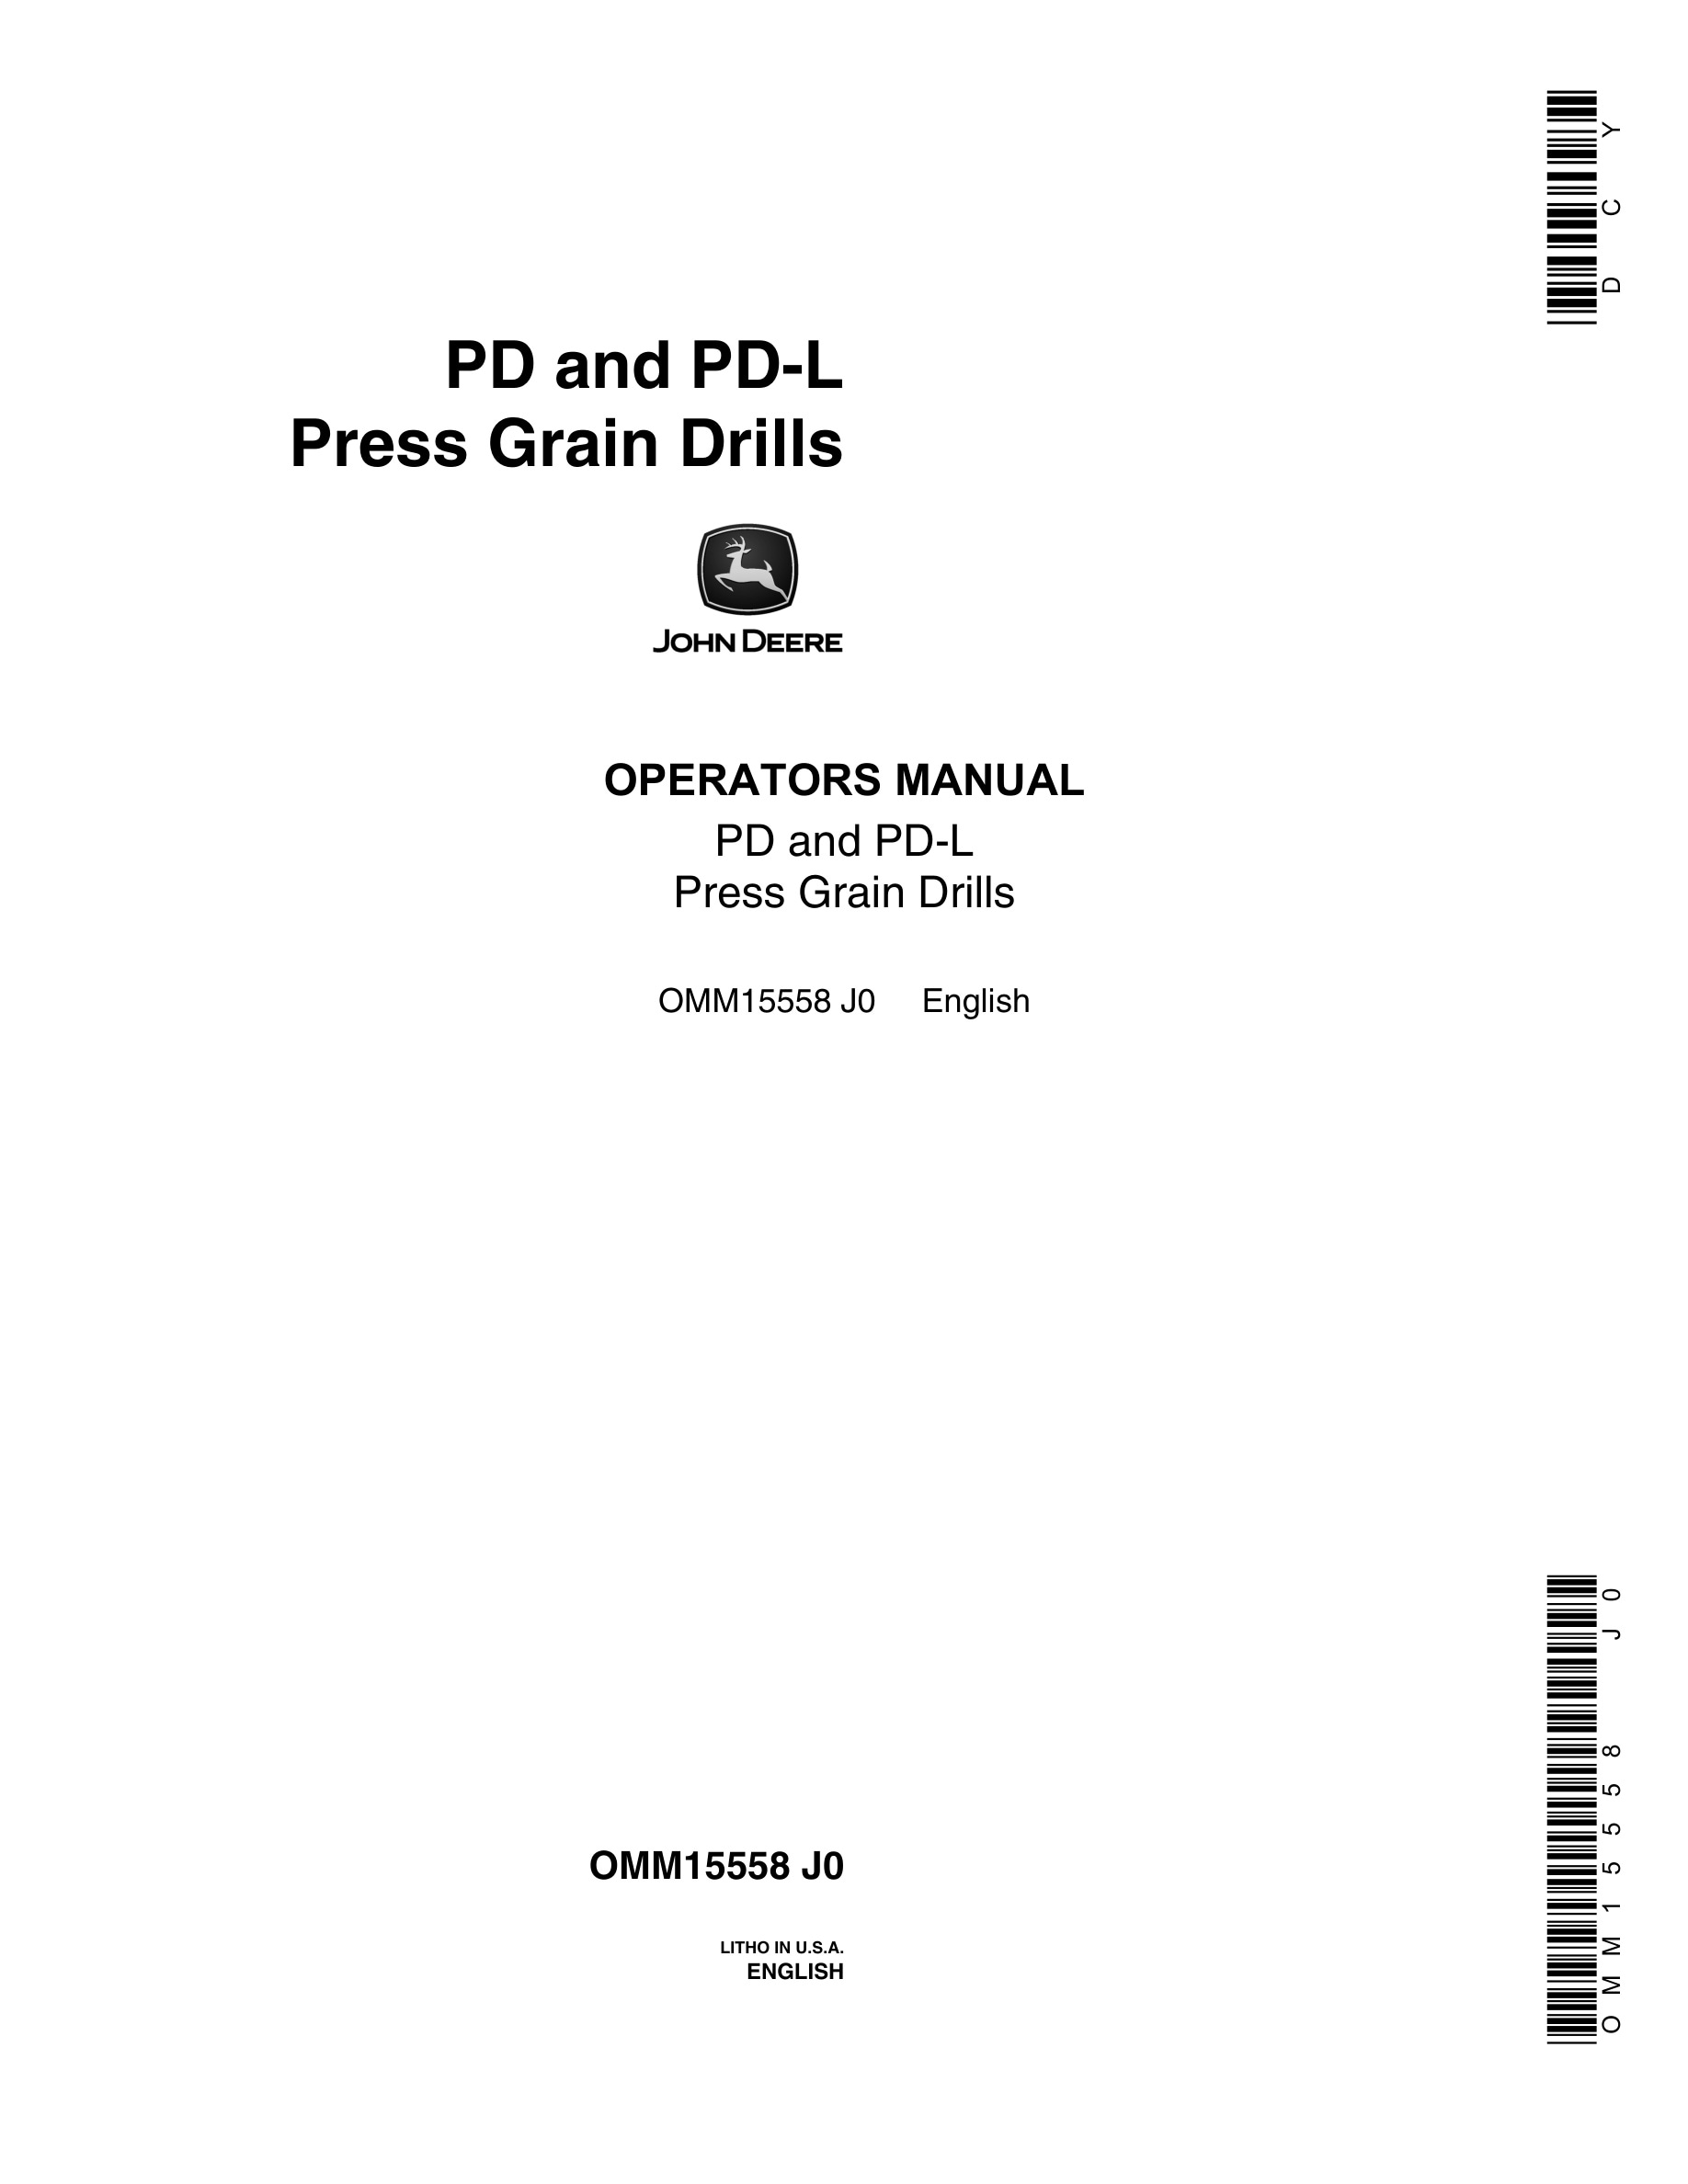 John Deere PD and PD-L Press Grain Drill Operator Manual OMM15558-1